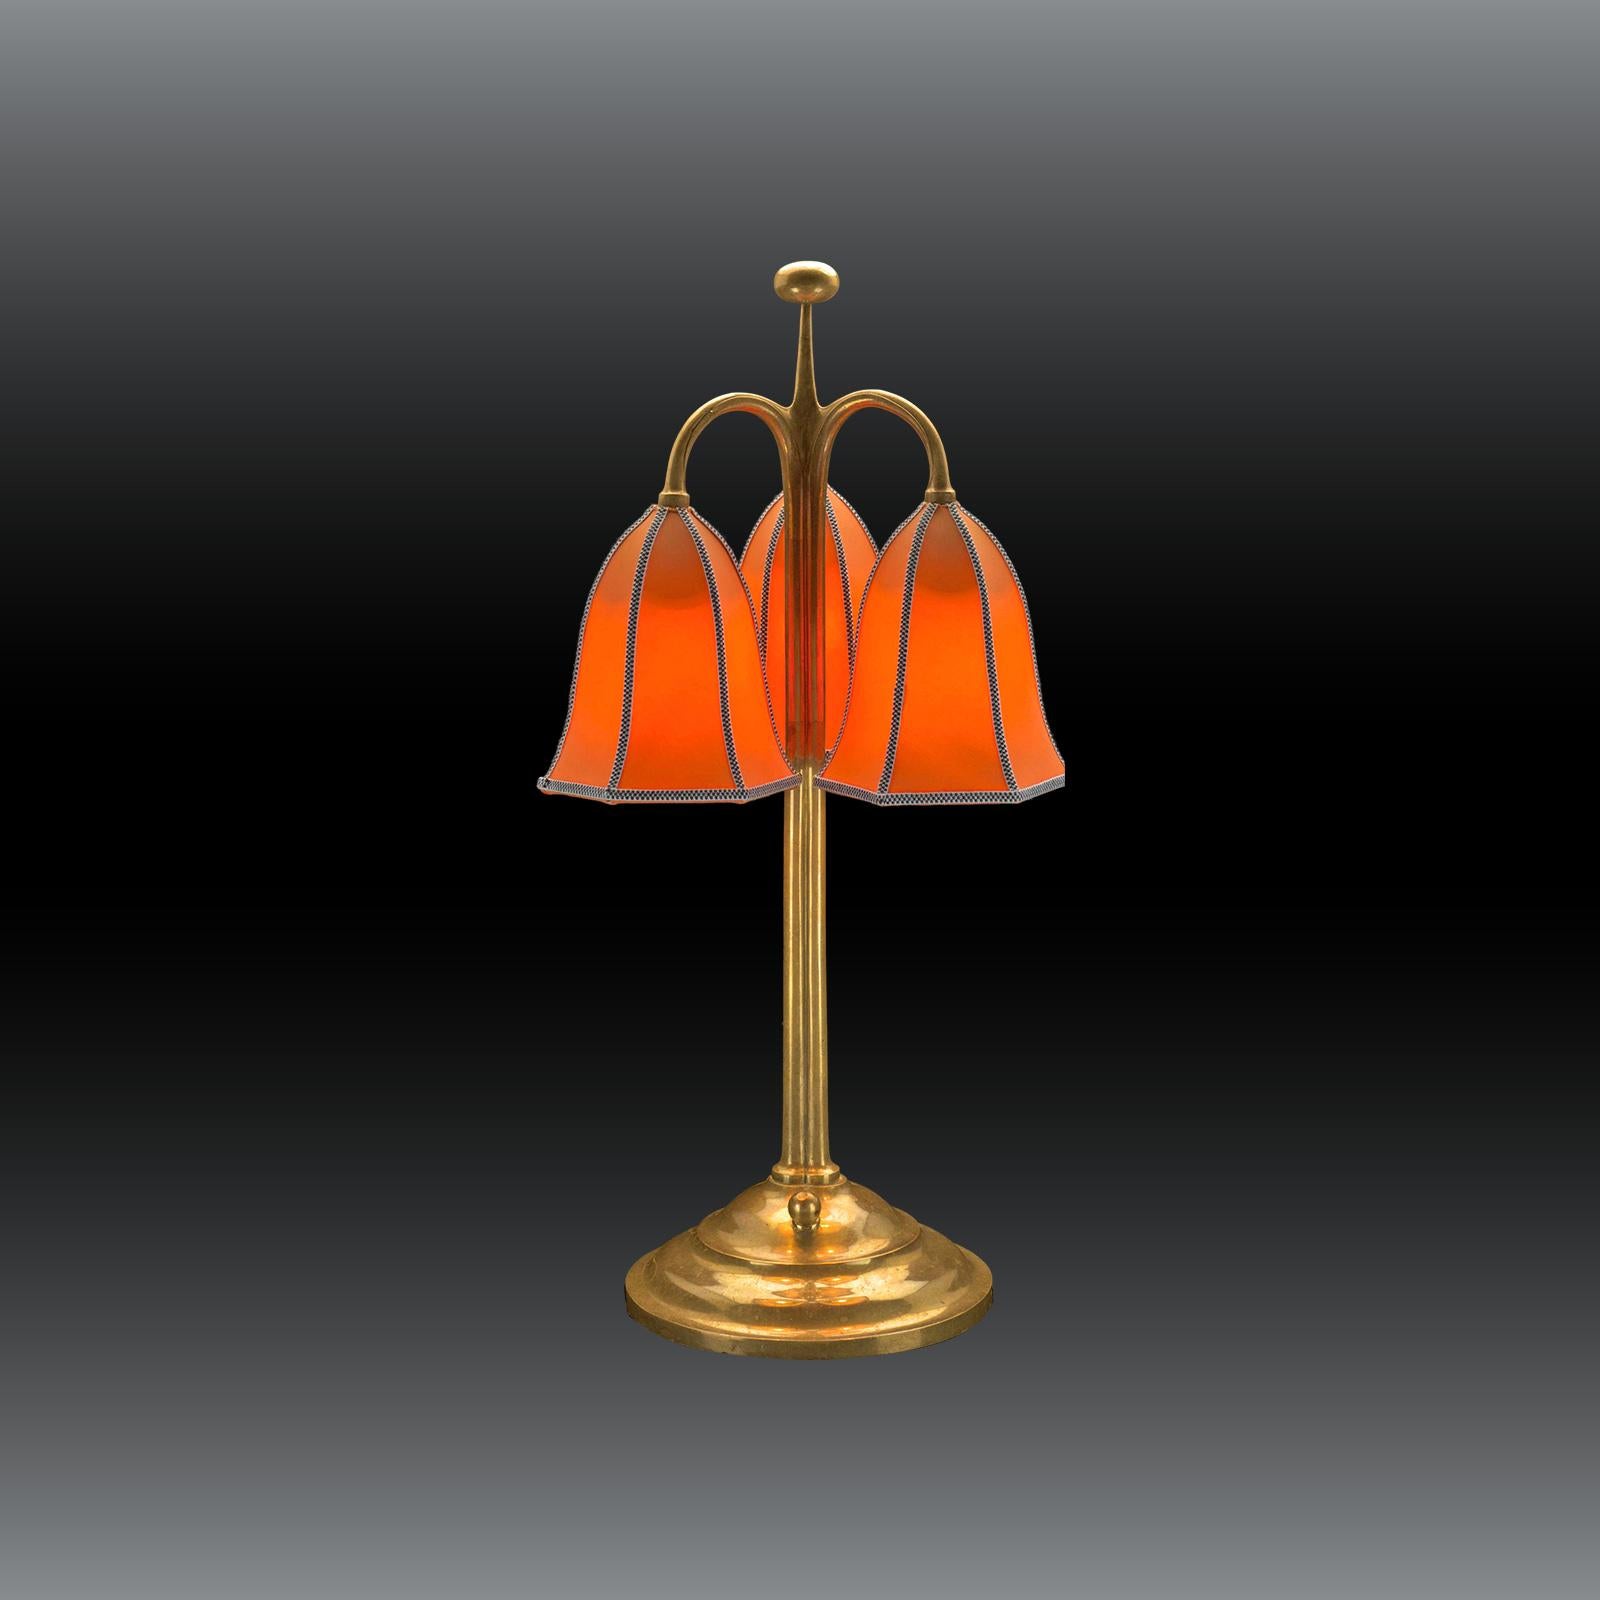 Austrian Josef Hoffmann for the Wiener Werkstaette Ceiling Lamp Fabric Shades, Re Edition For Sale